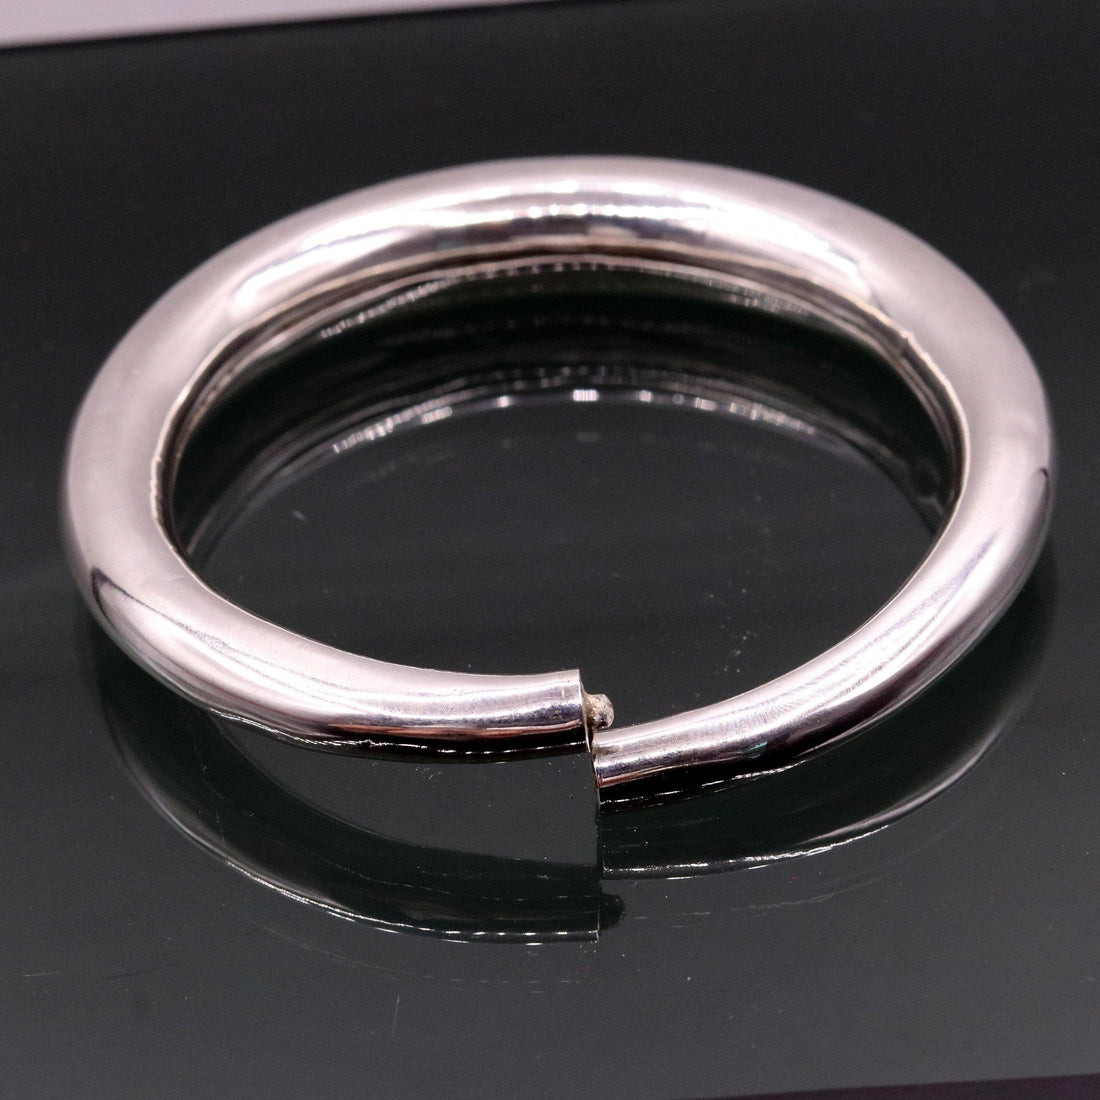 925 sterling silver vintage plain design handmade open face adjustable bangle bracelet kada cuff bracelet for unisex gifting india nsk228 - TRIBAL ORNAMENTS